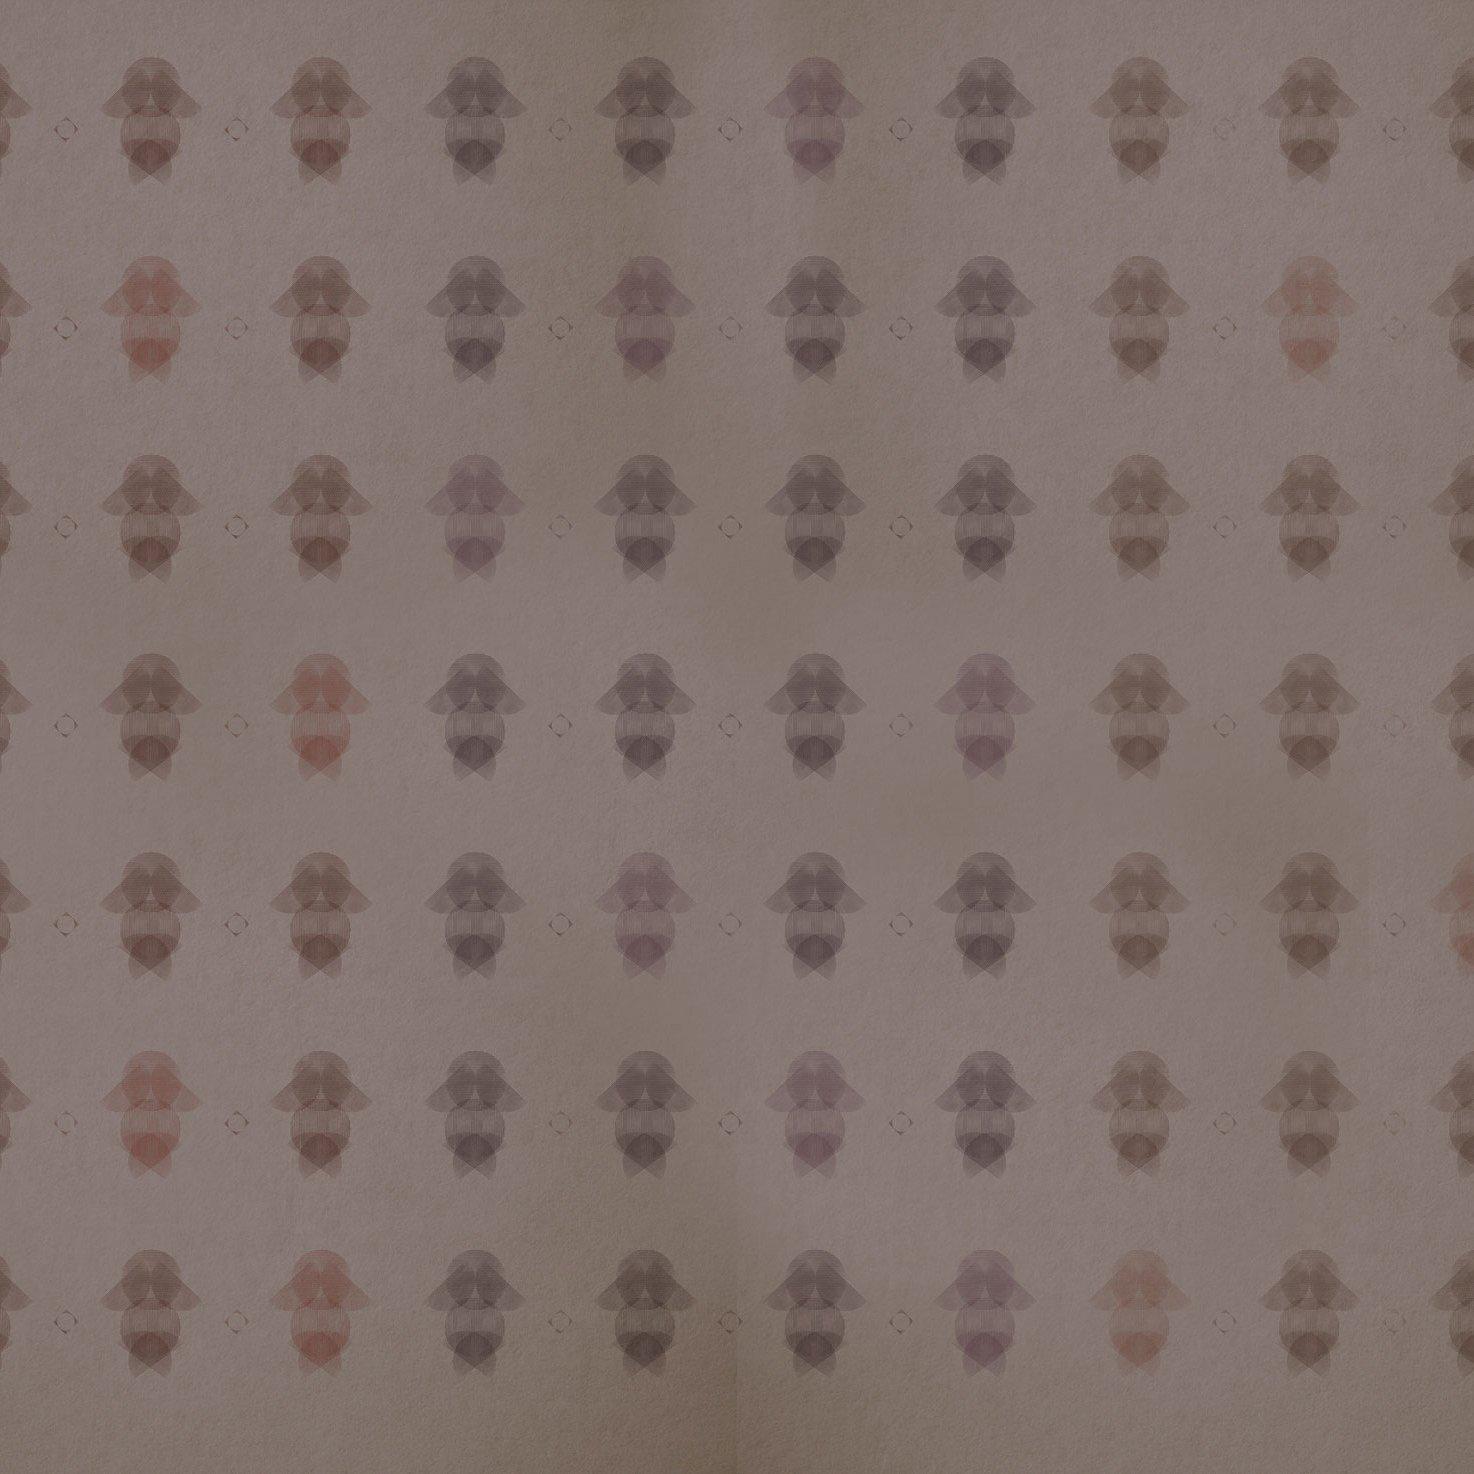 Stripes Ladybug-Digital Wallpaper-Tecnografica-Brown 2-70874-2A